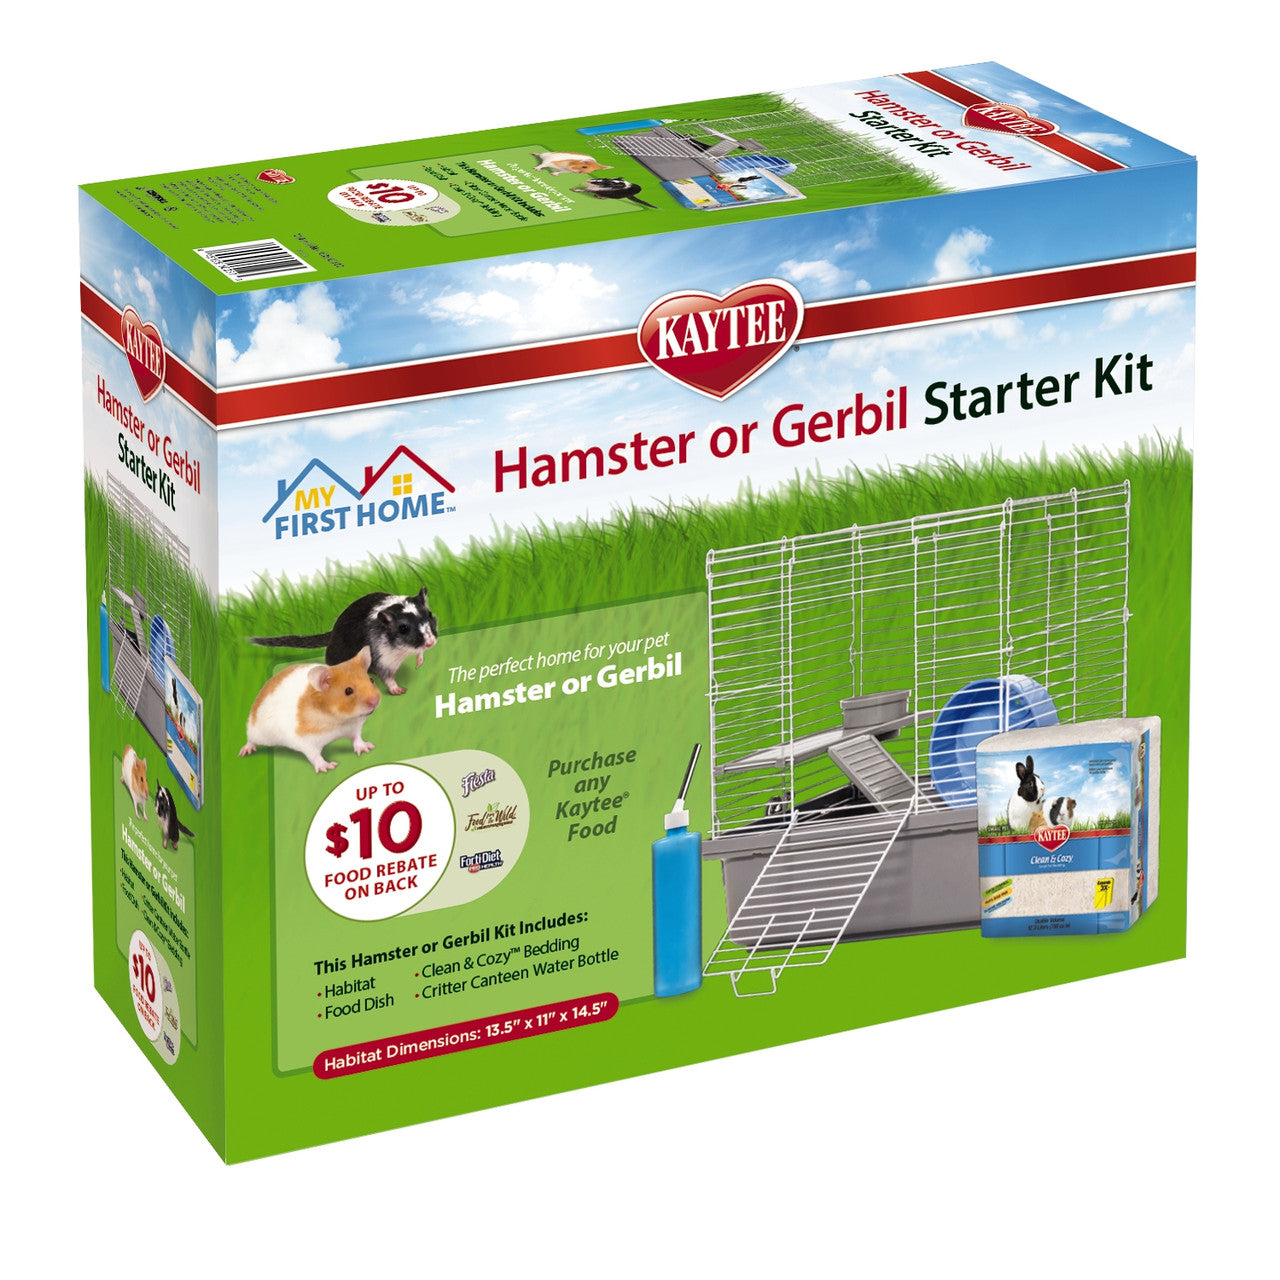 Kaytee My First Home Hamster or Gerbil Starter Kit 13.5? x 11? x 14.5?